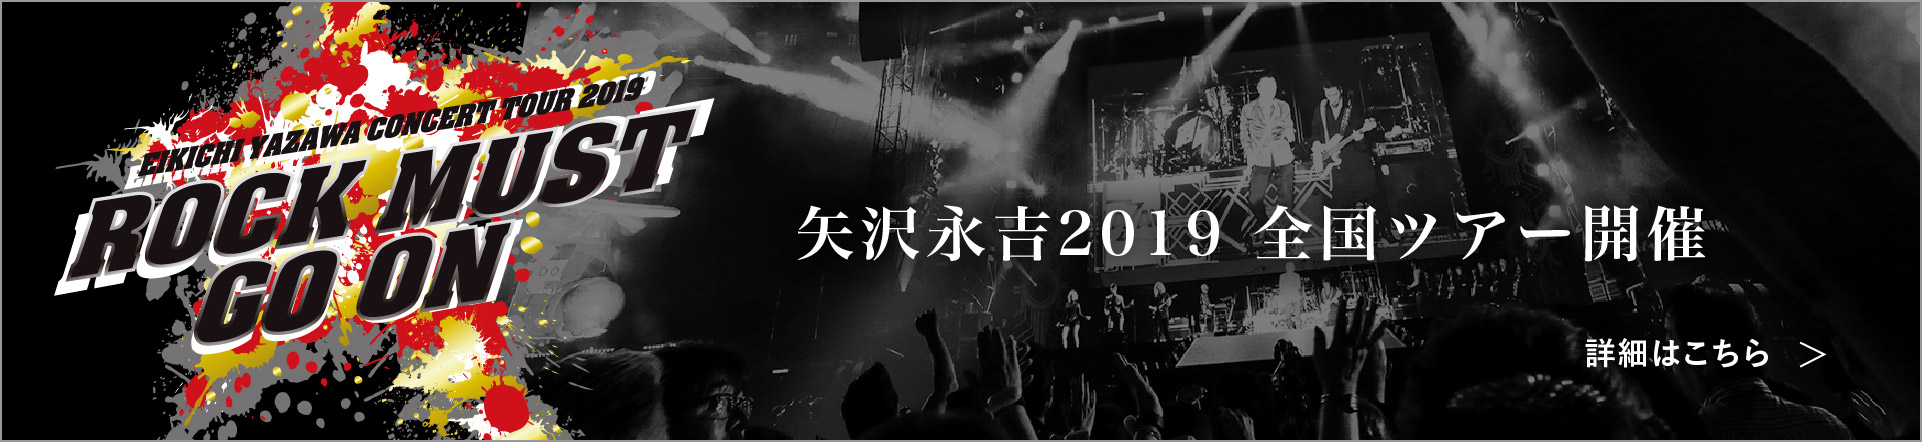 ROCK MUST GO ON | EIKICHI YAZAWA CONCERT TOUR 2019